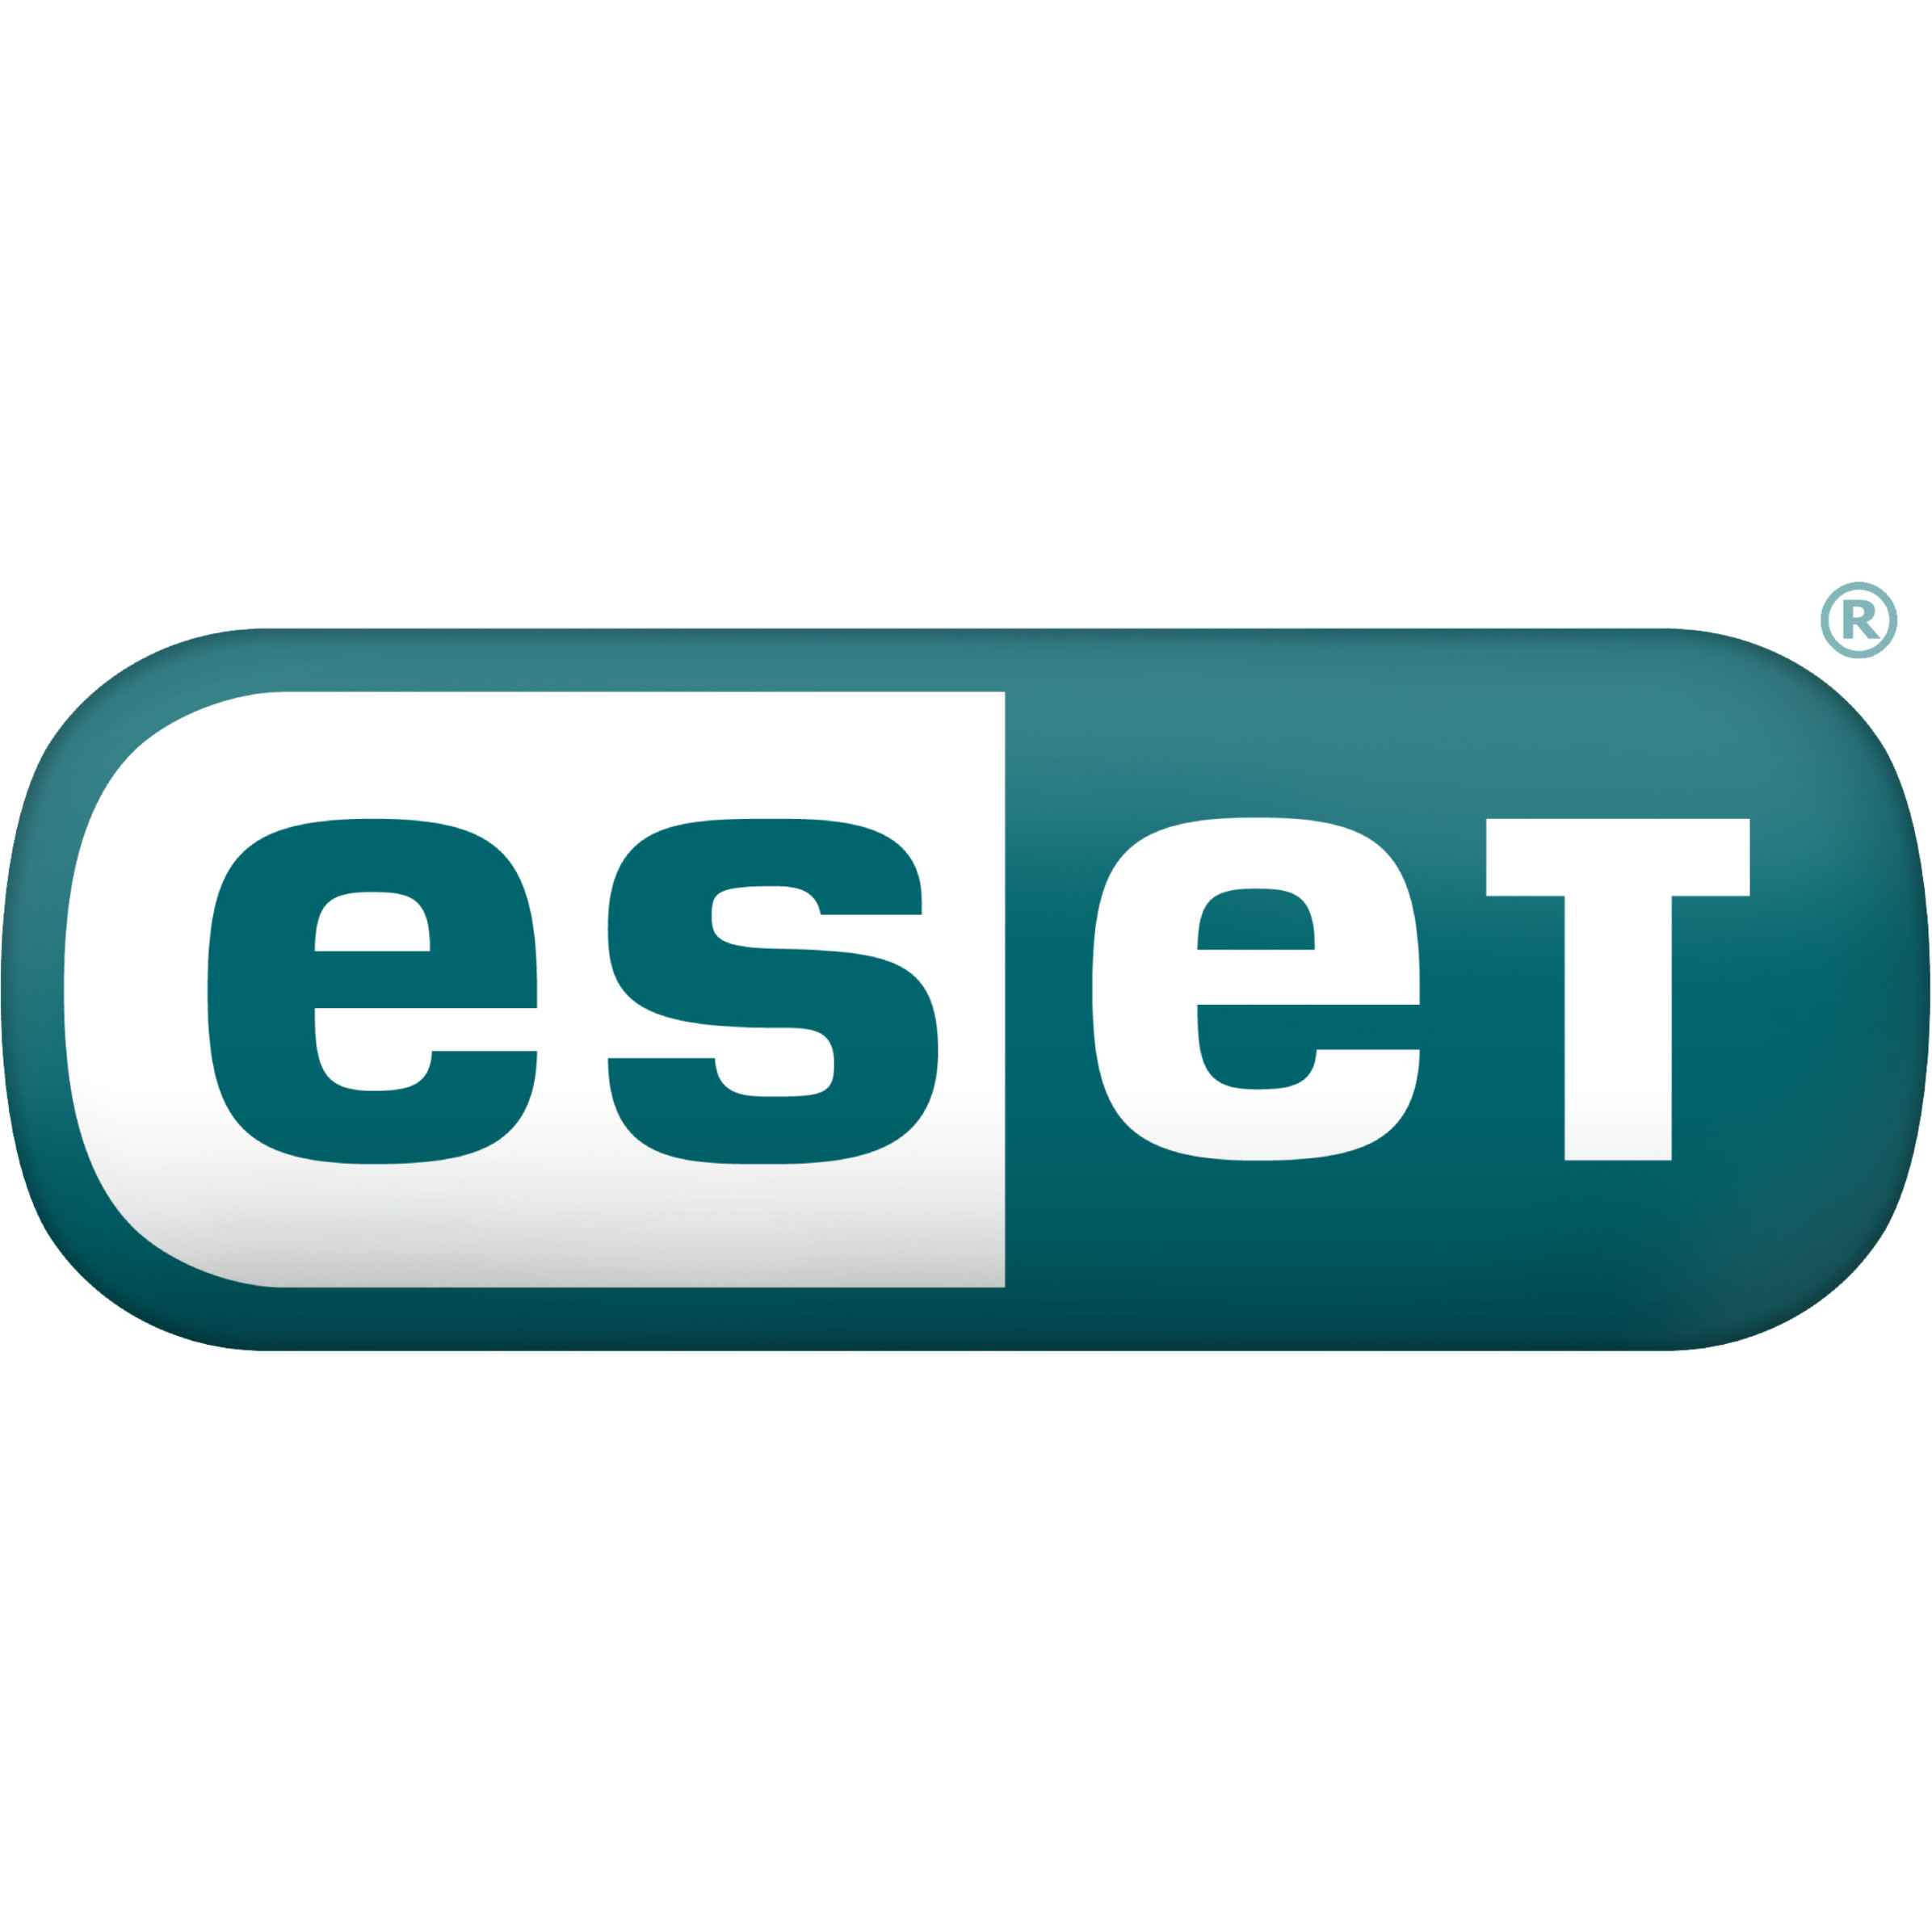 ESET PROTECT AdvancedSubscription License5 DevicePC, Mac, Handheld